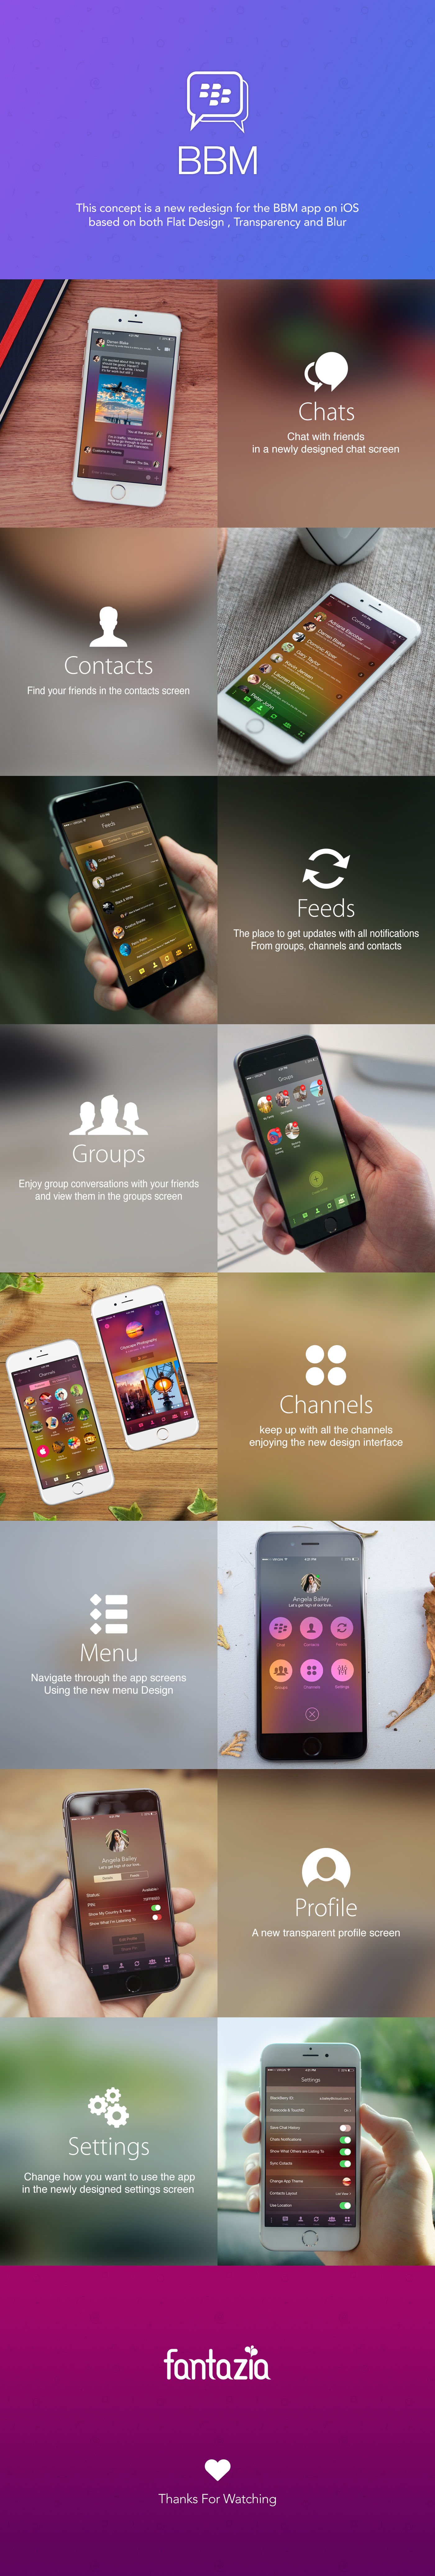 ios app apple iphone Chat bbm flat design social messaging iphone 6 blur colors colorful